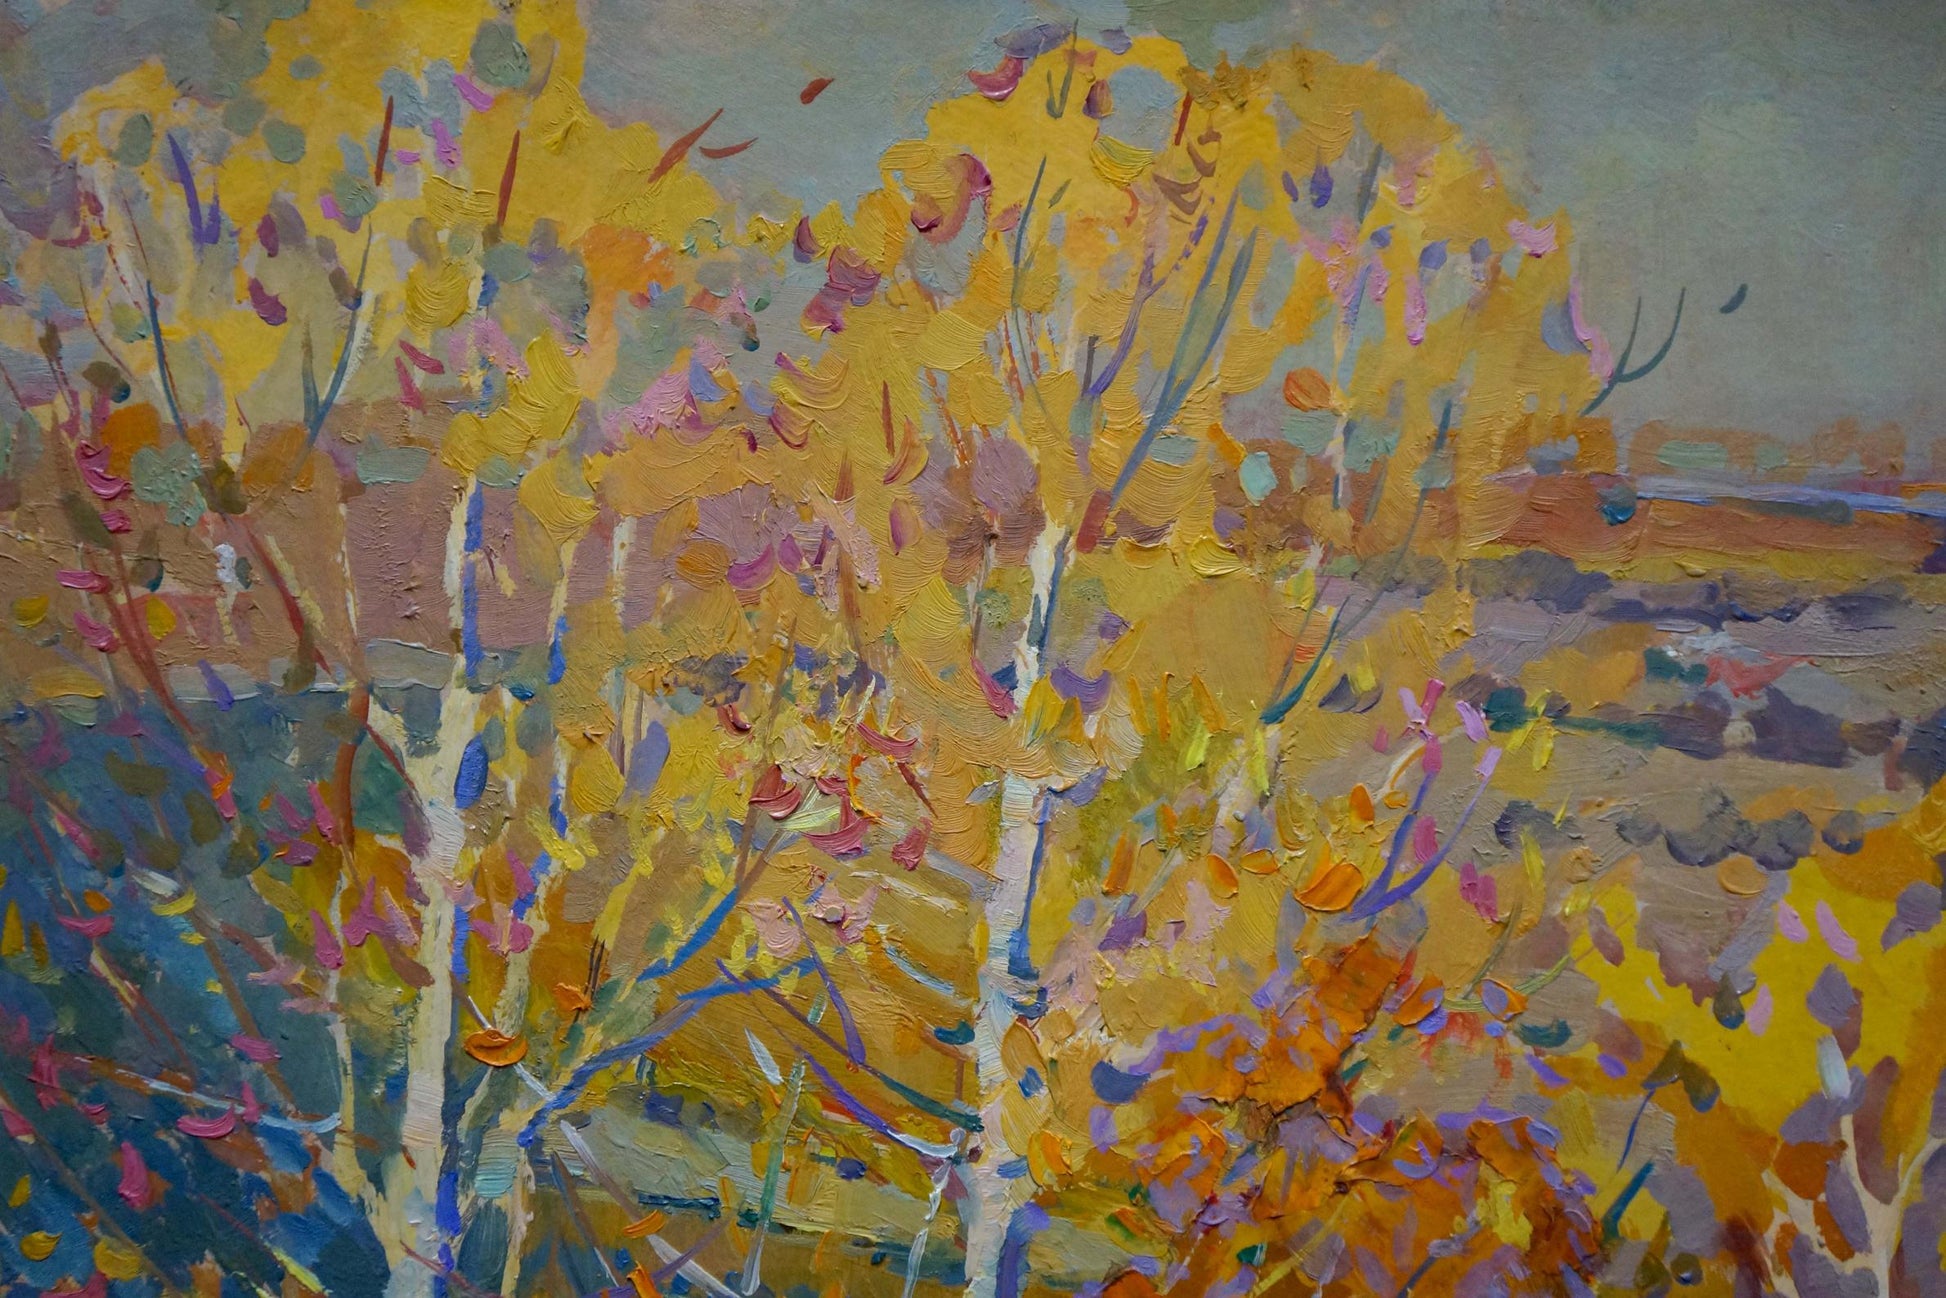 The artwork captures the golden hues of fall by Kolesnik